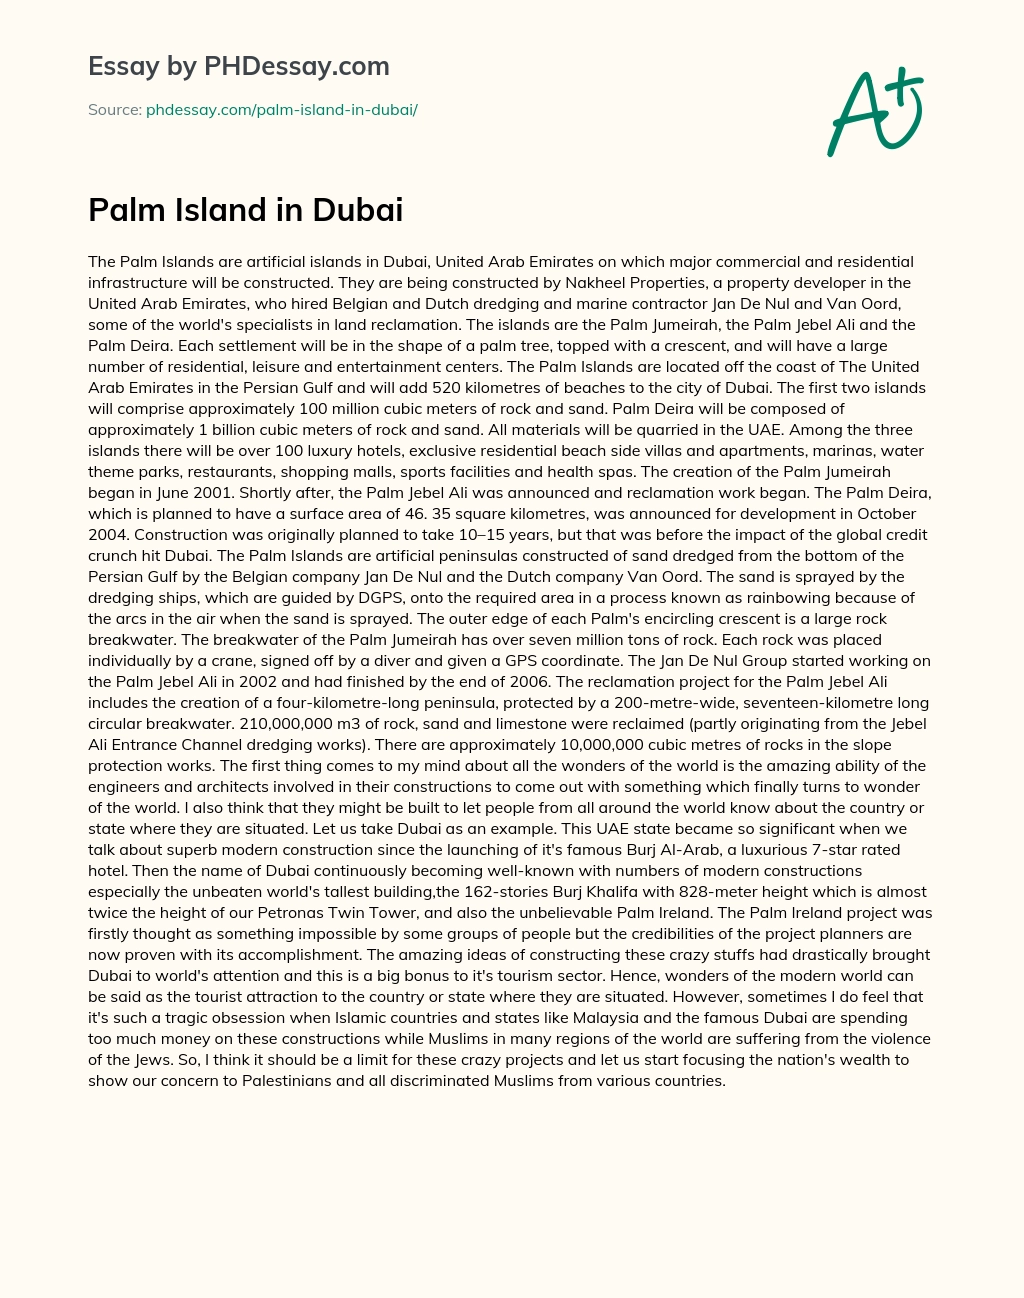 Palm Island in Dubai essay